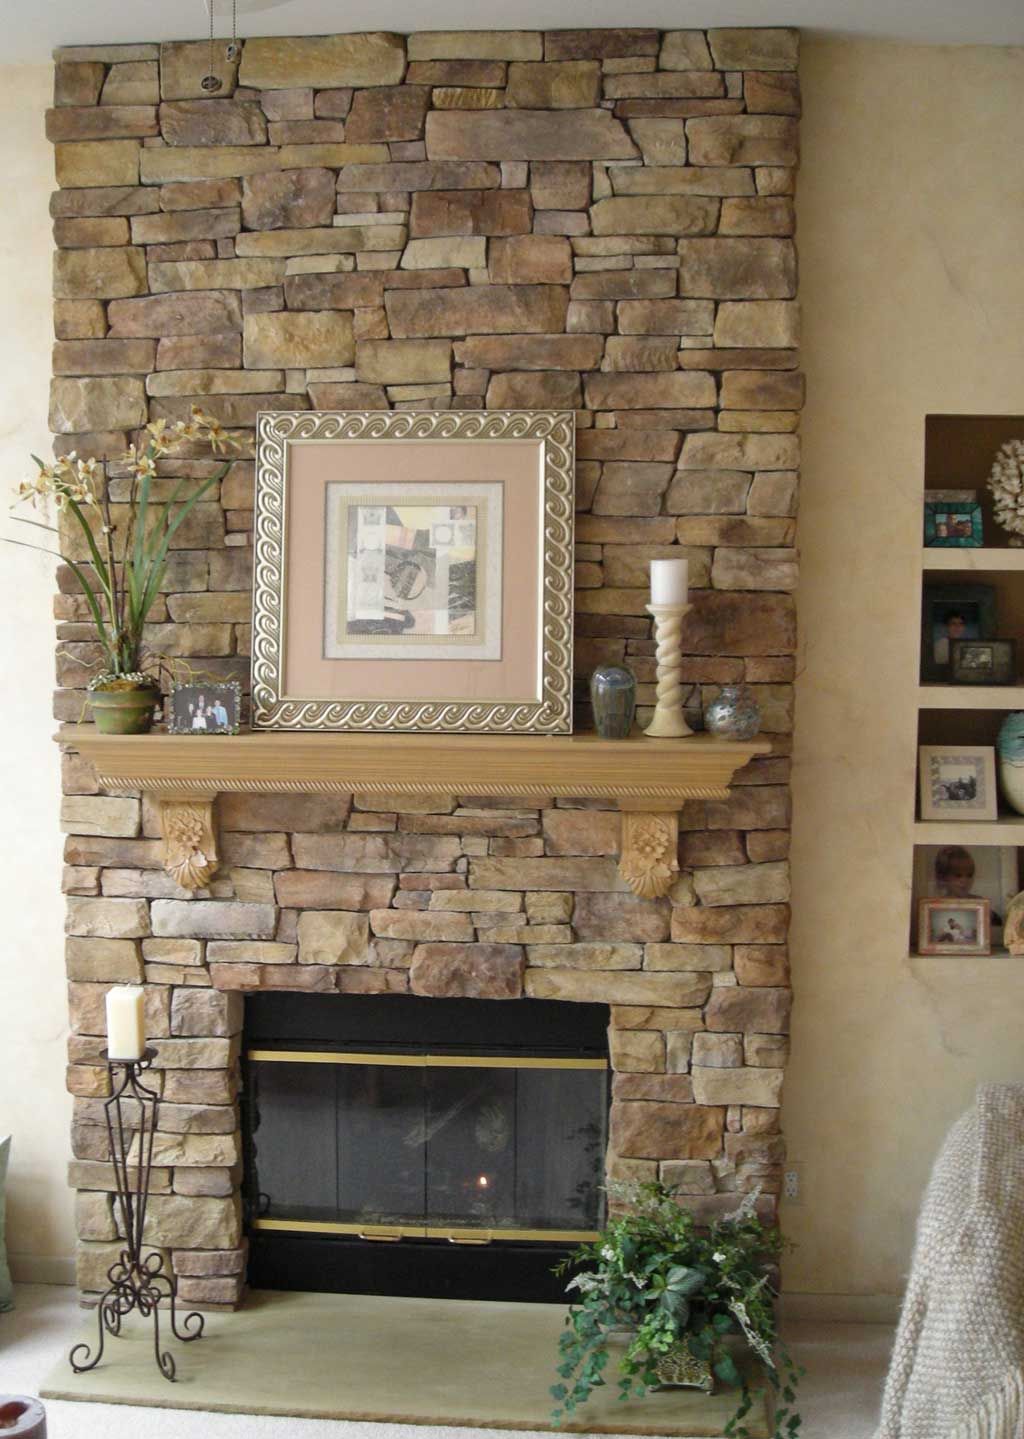 How to Put Stone Veneer On A Fireplace Fresh Stone Veneer Fireplace Design Fireplace In 2019